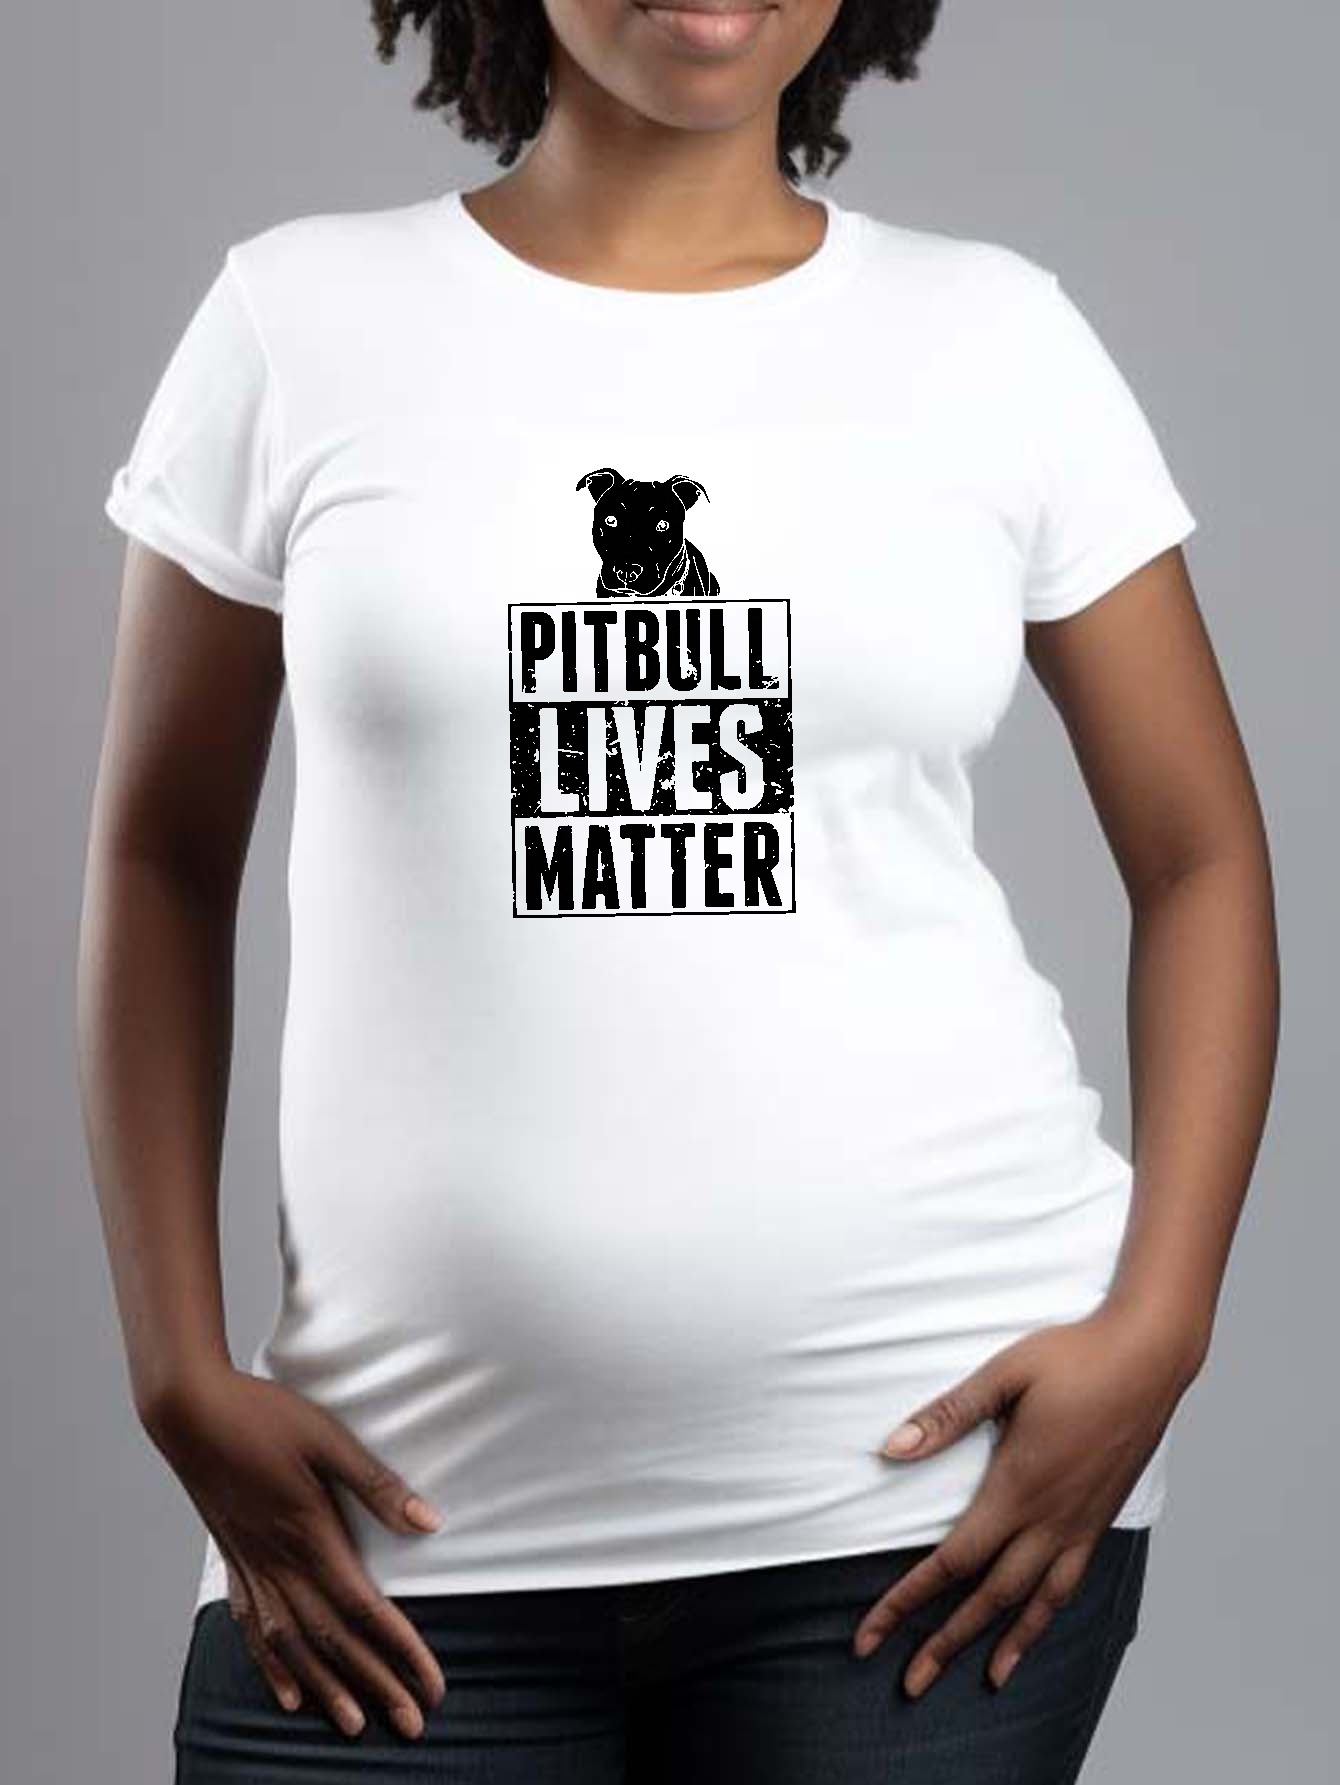 Dog Pitbull Cute Graphic Womens Stylish Maternity T Shirt Short